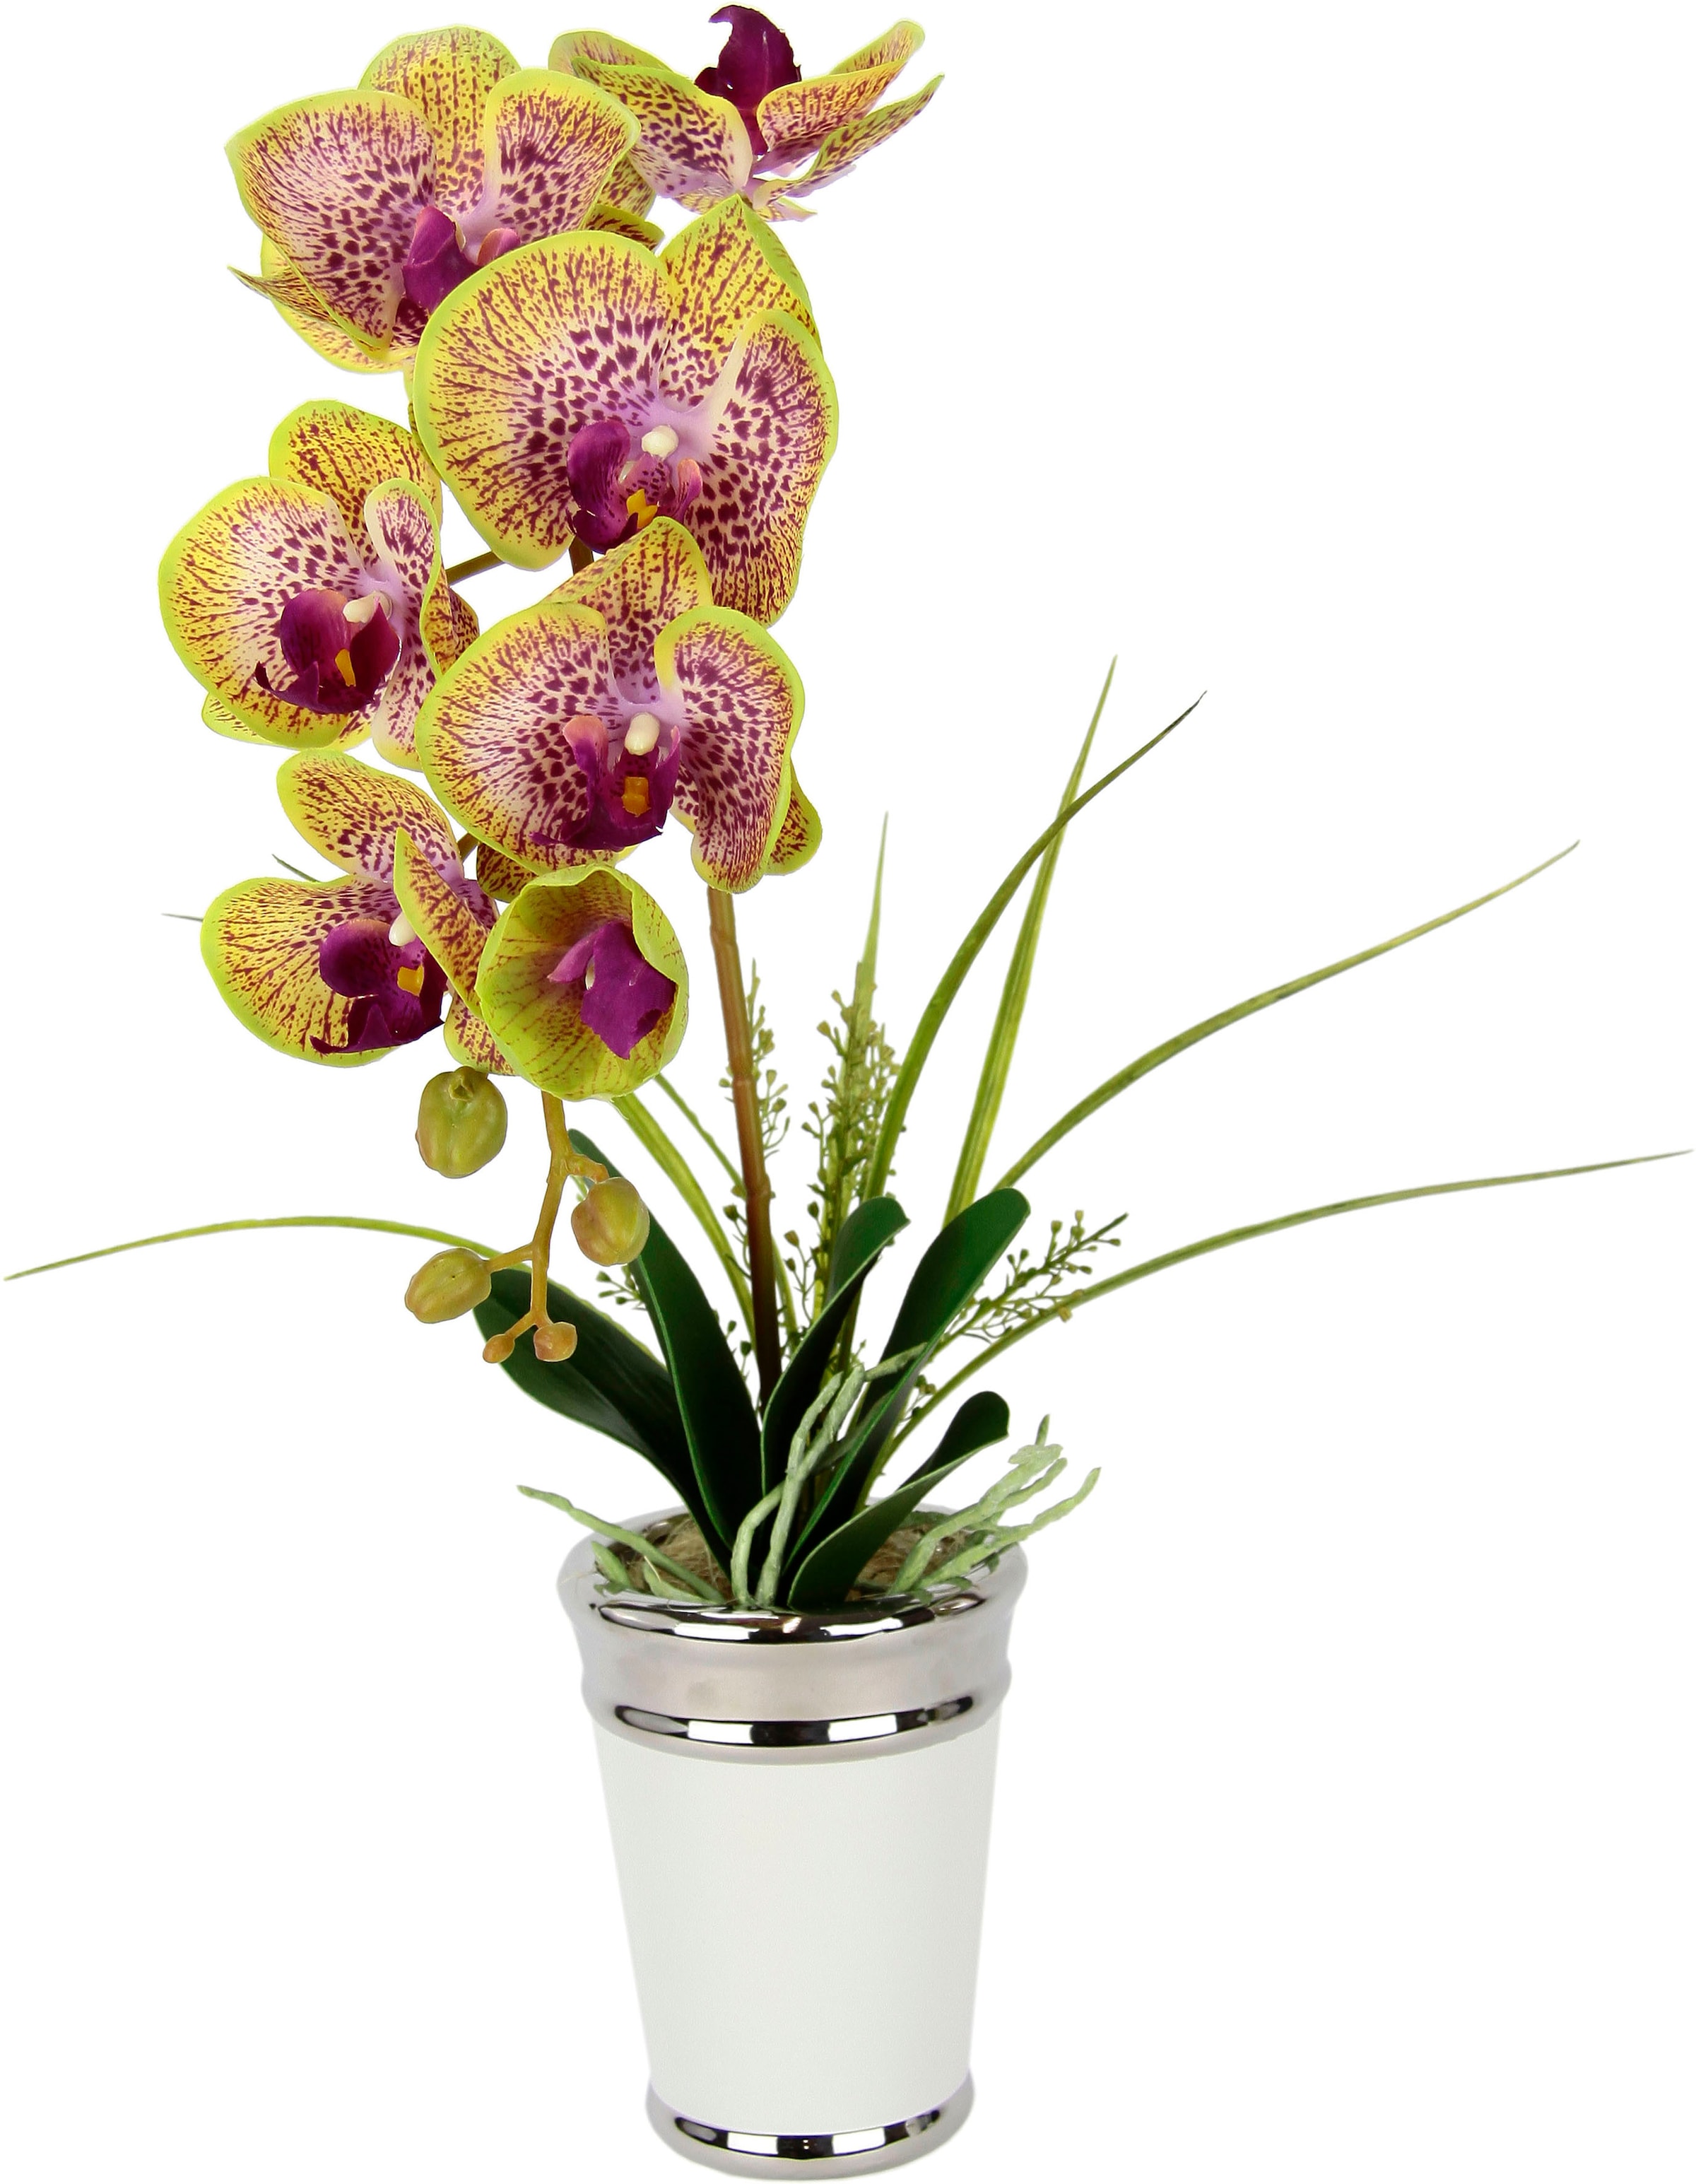 Real im kaufen Touch I.GE.A. Keramik, Seidenblume Kunstblume Topf, bequem »Orchidee«, aus